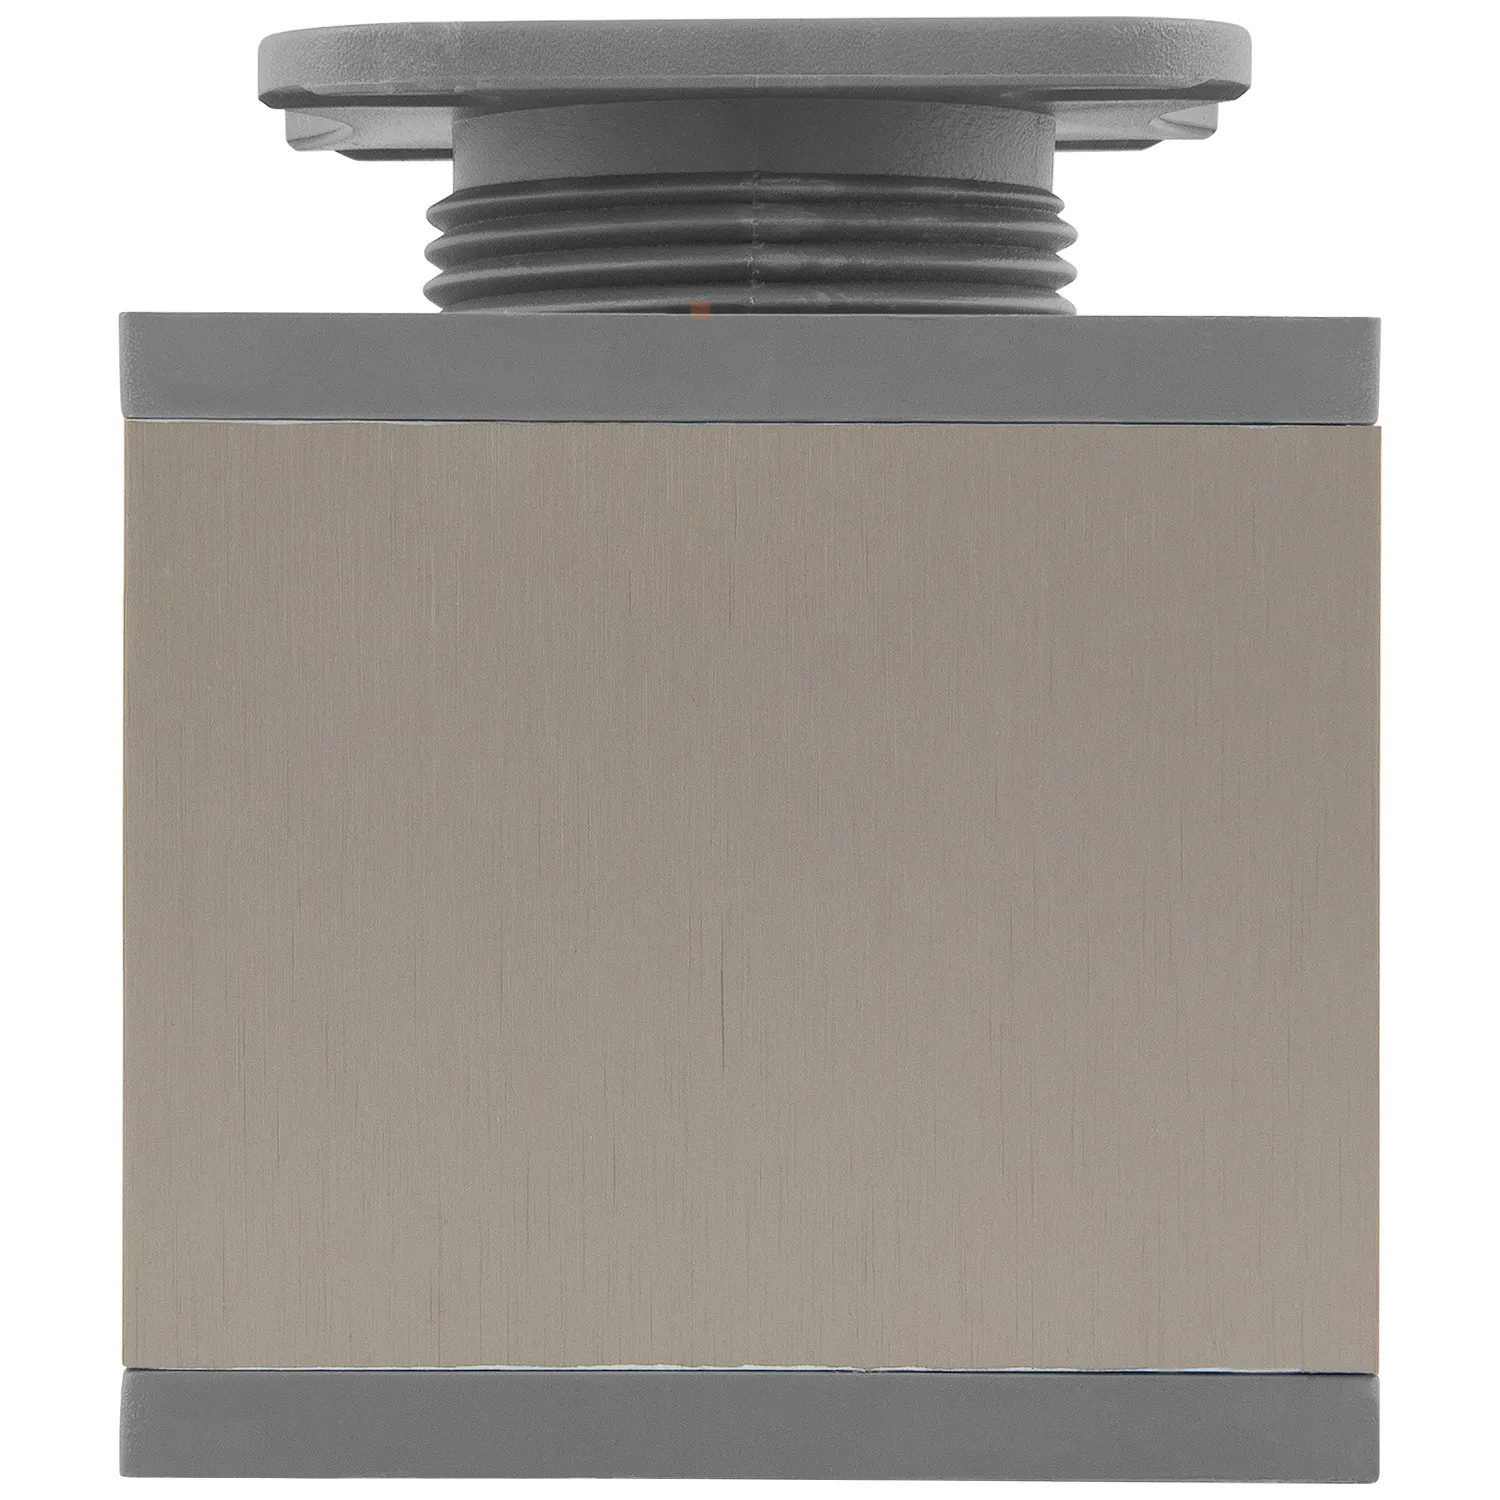 Nóżka meblowa kwadratowa regulowana 60×60 h-60 aluminiowa Inox